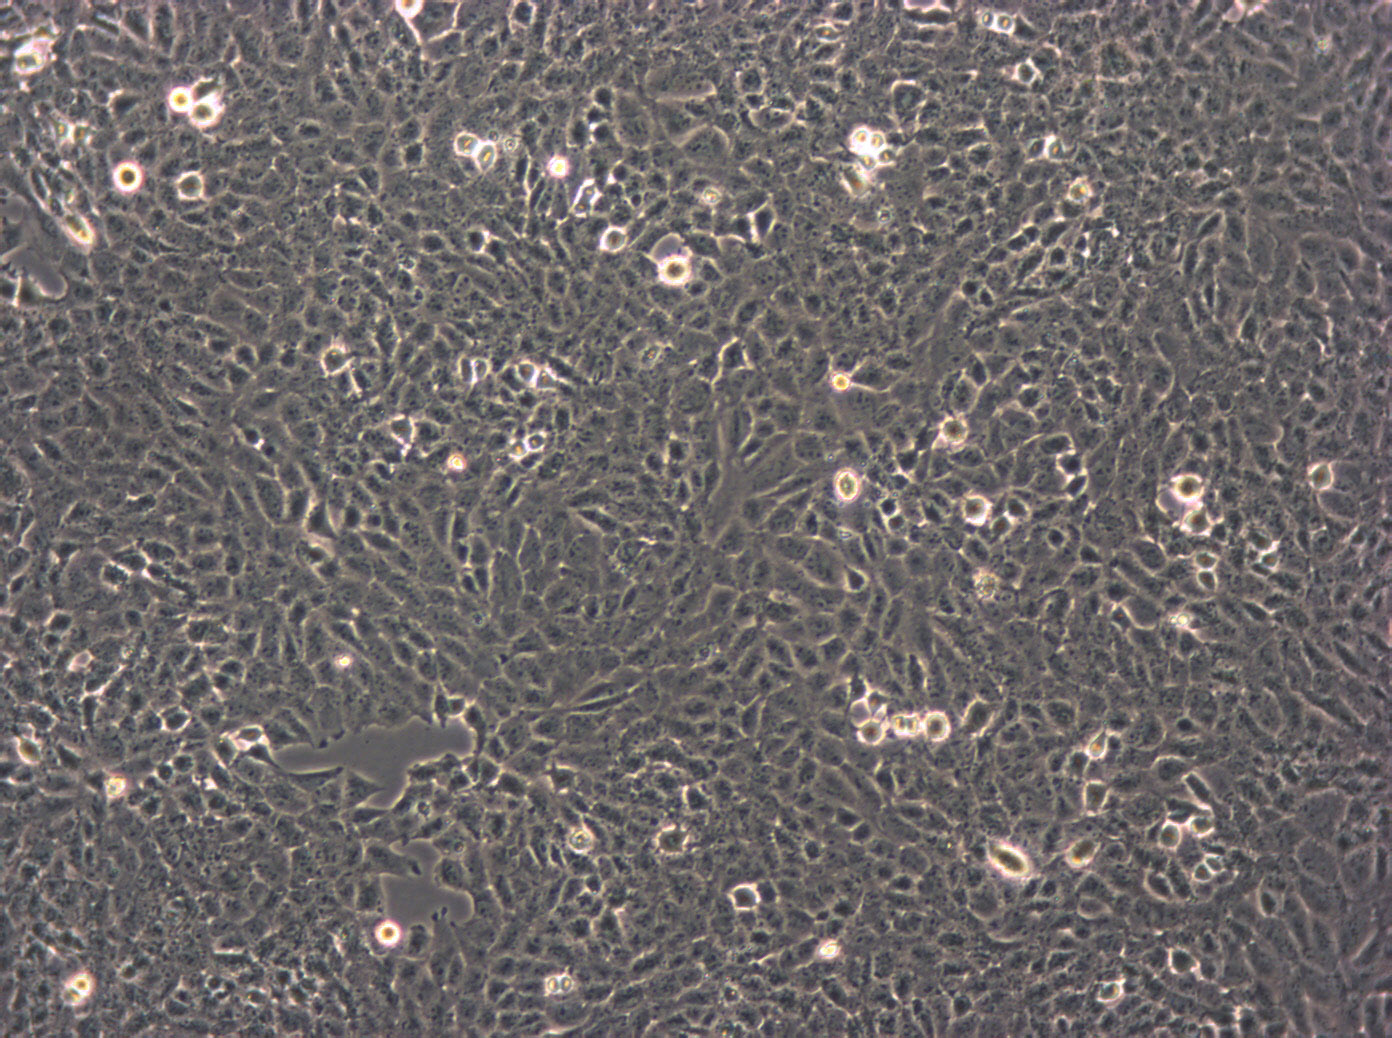 CHP-212 cell line人脑神经母细胞瘤细胞系,CHP-212 cell line